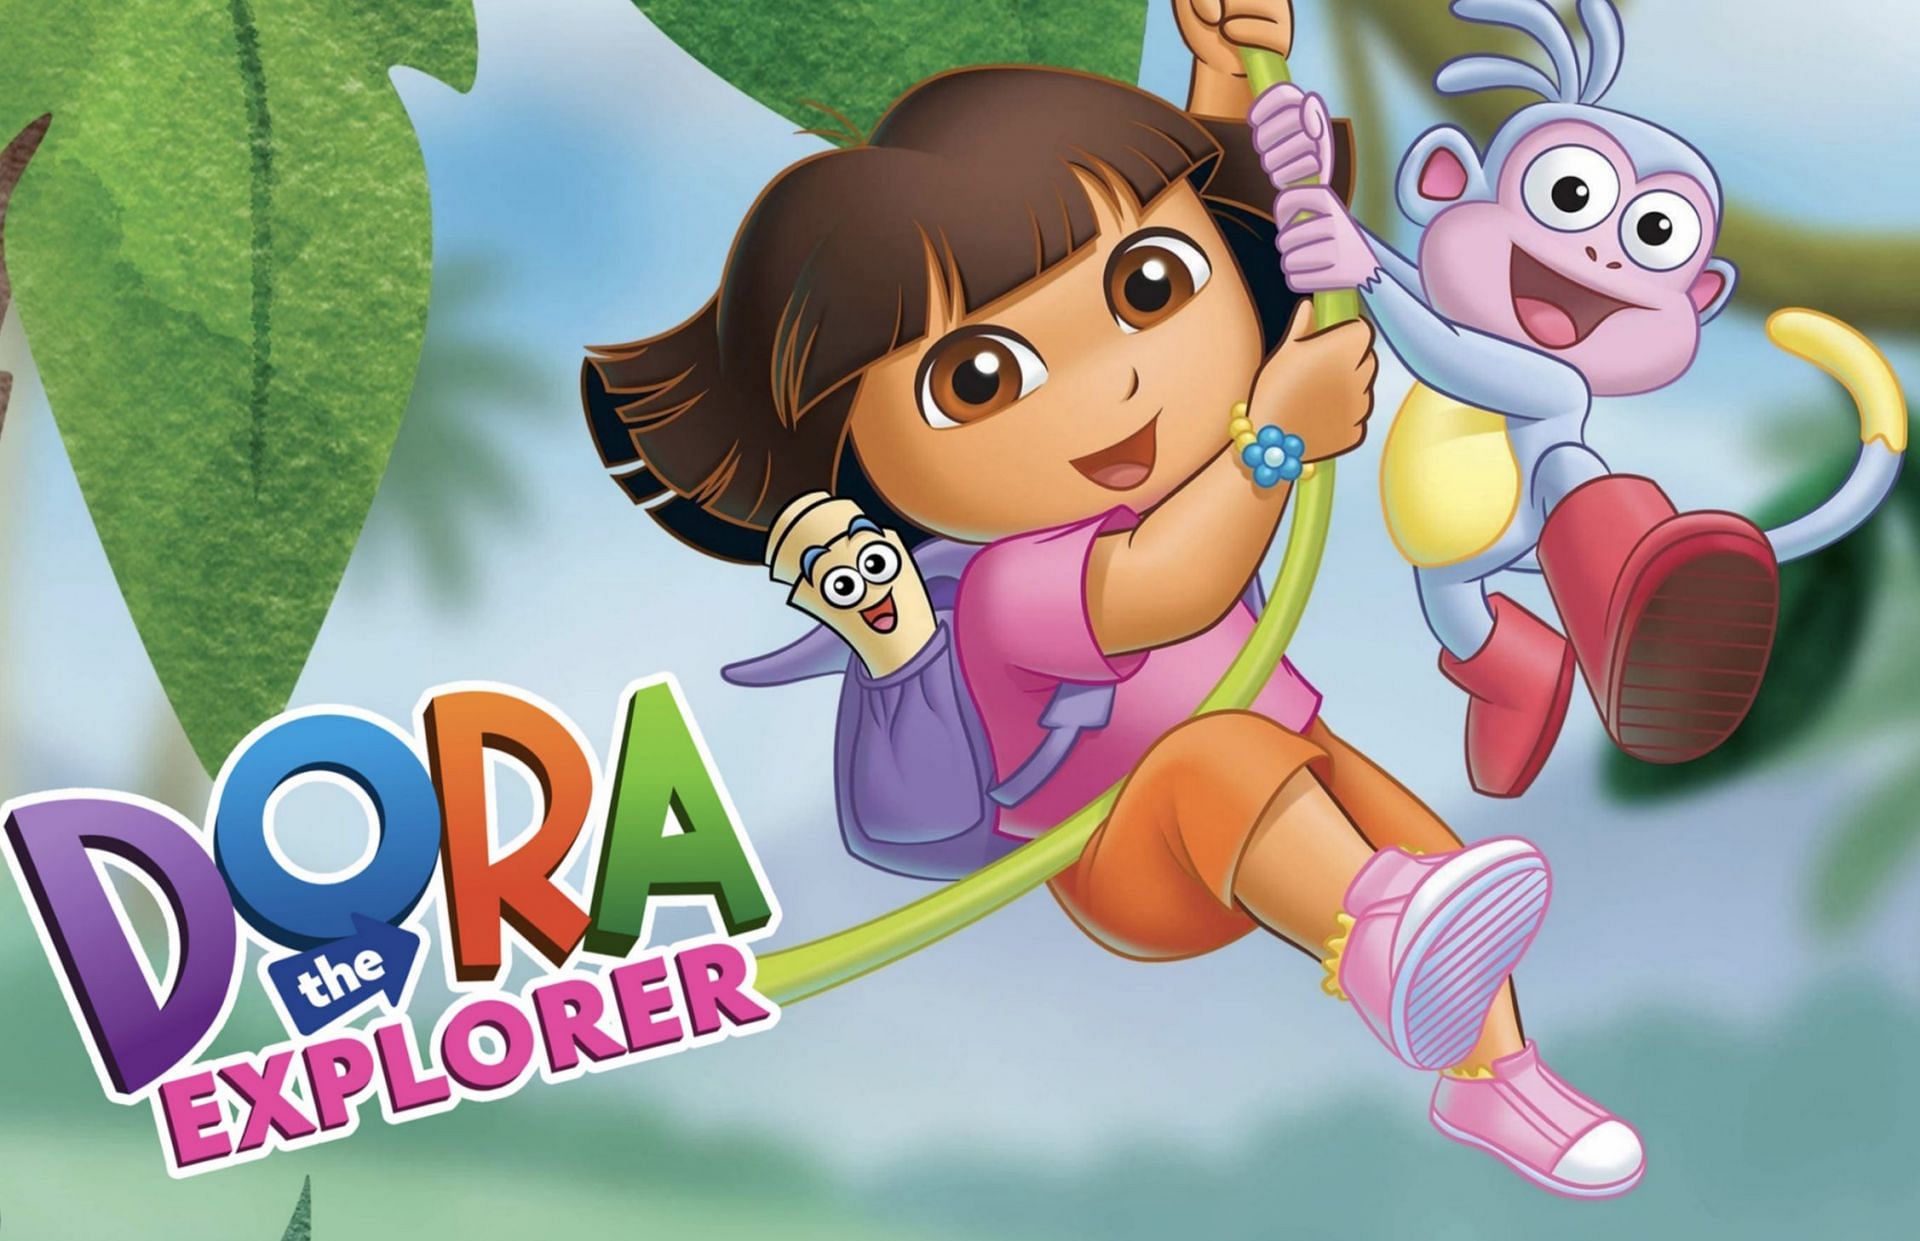 Dora the Explorer (Image via Prime Video)